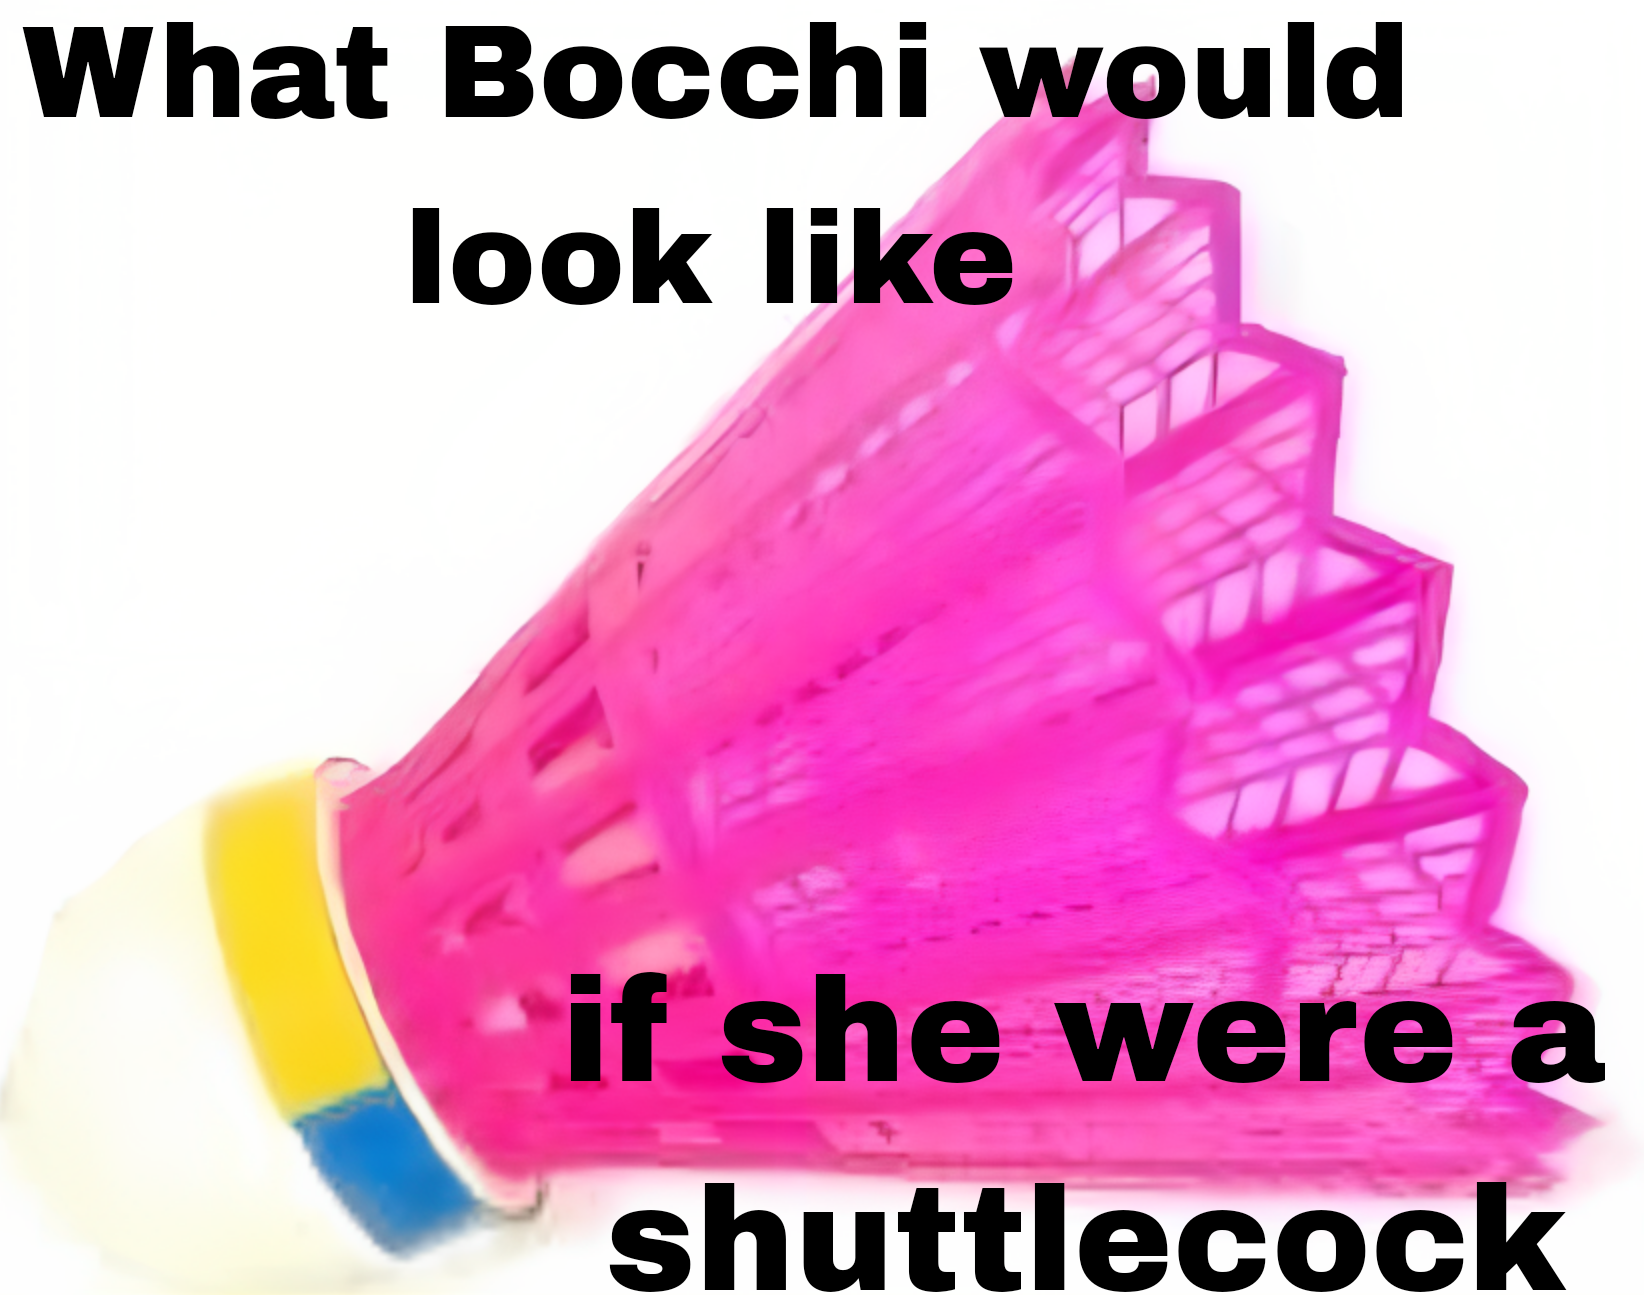 Bocchi the Shuttle***